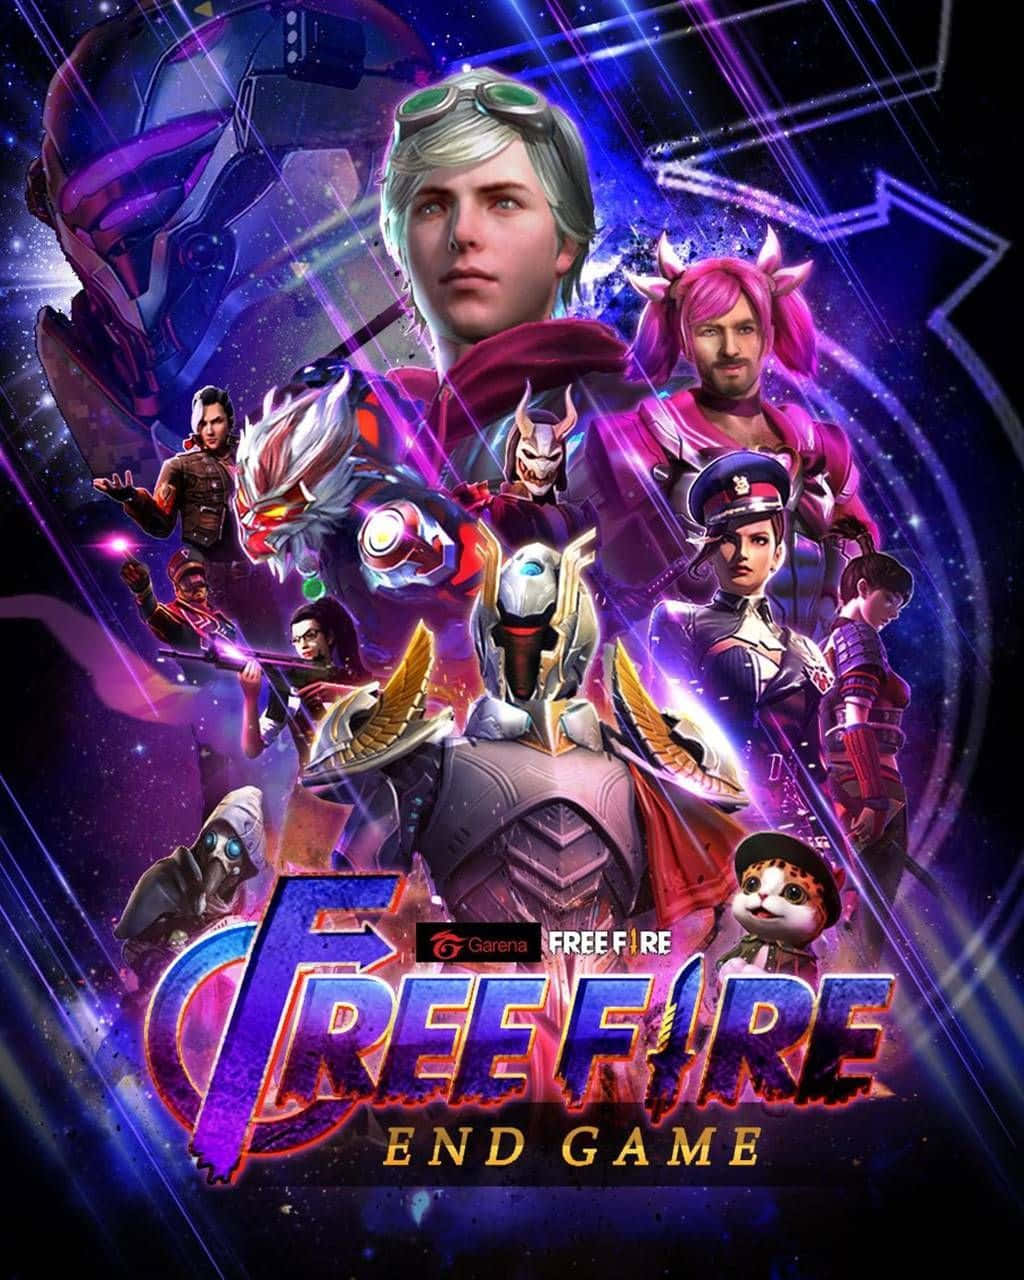 Garena Free Fire End Game Wallpaper